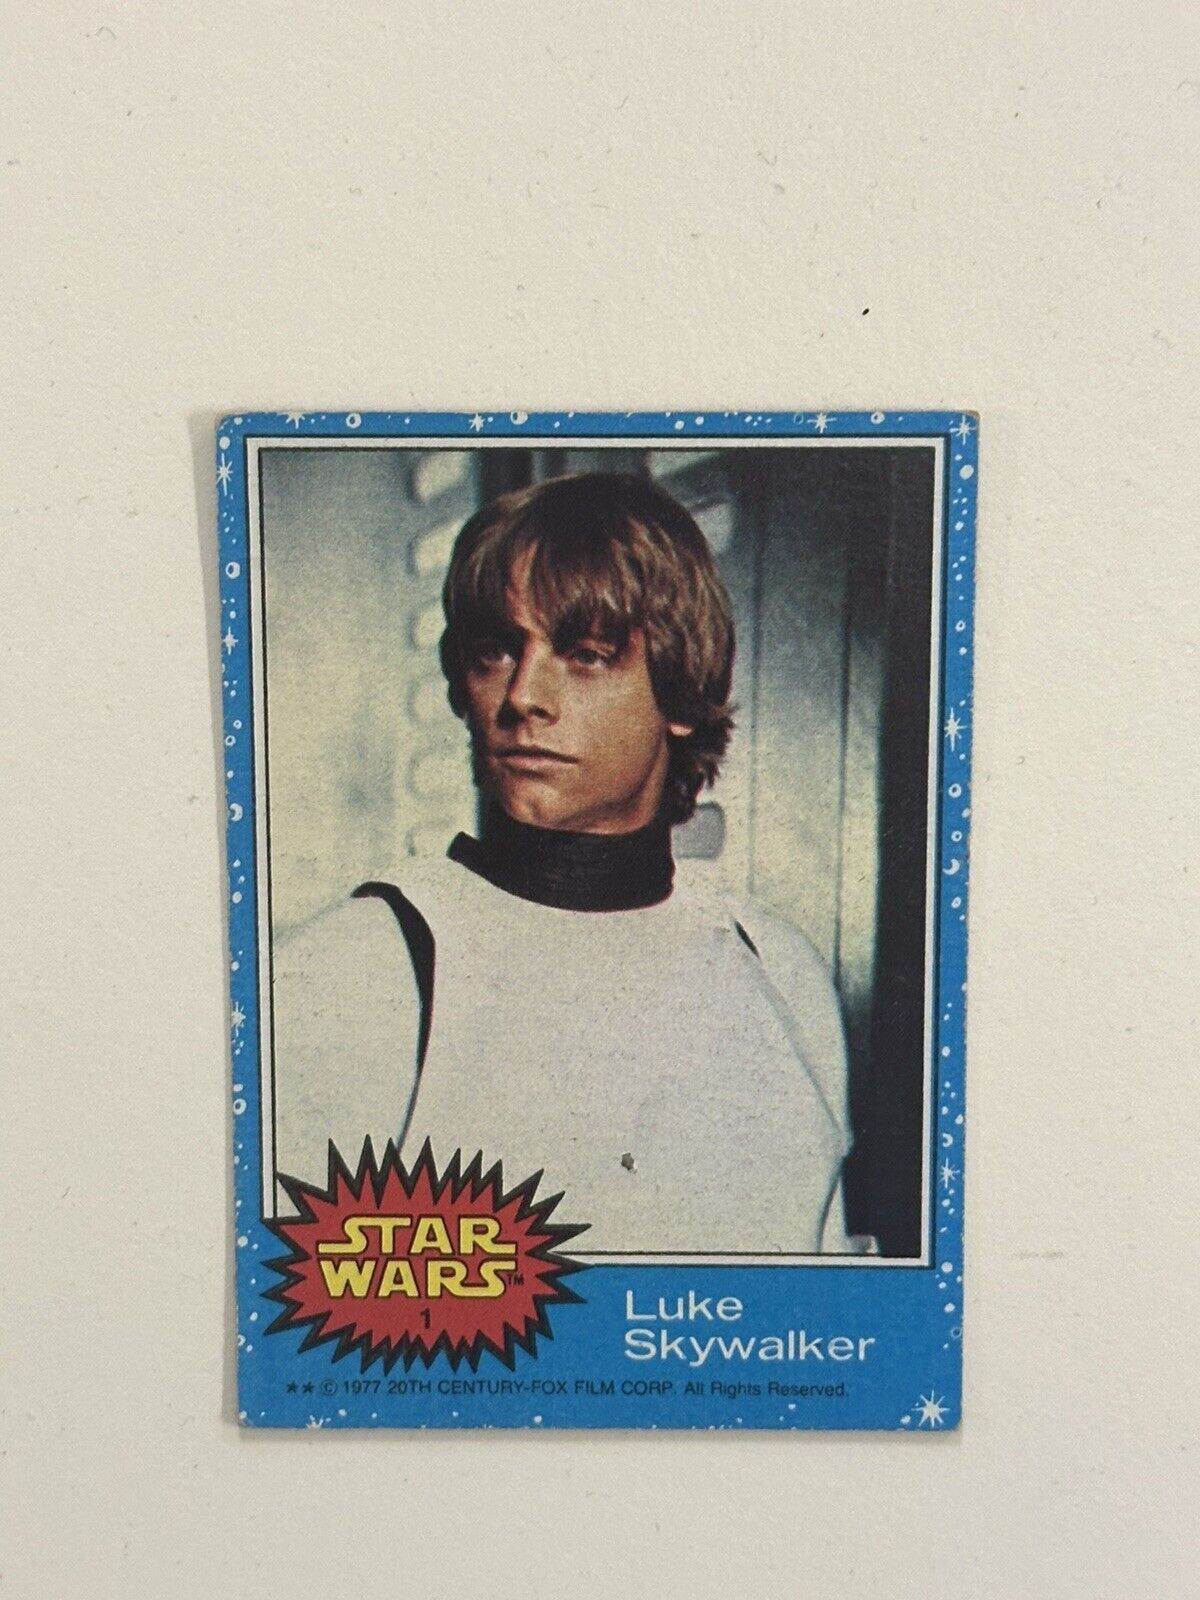 1977 Topps Star Wars Blue Series 1 Rookie Card Luke Skywalker #1 Mark Hamill RC